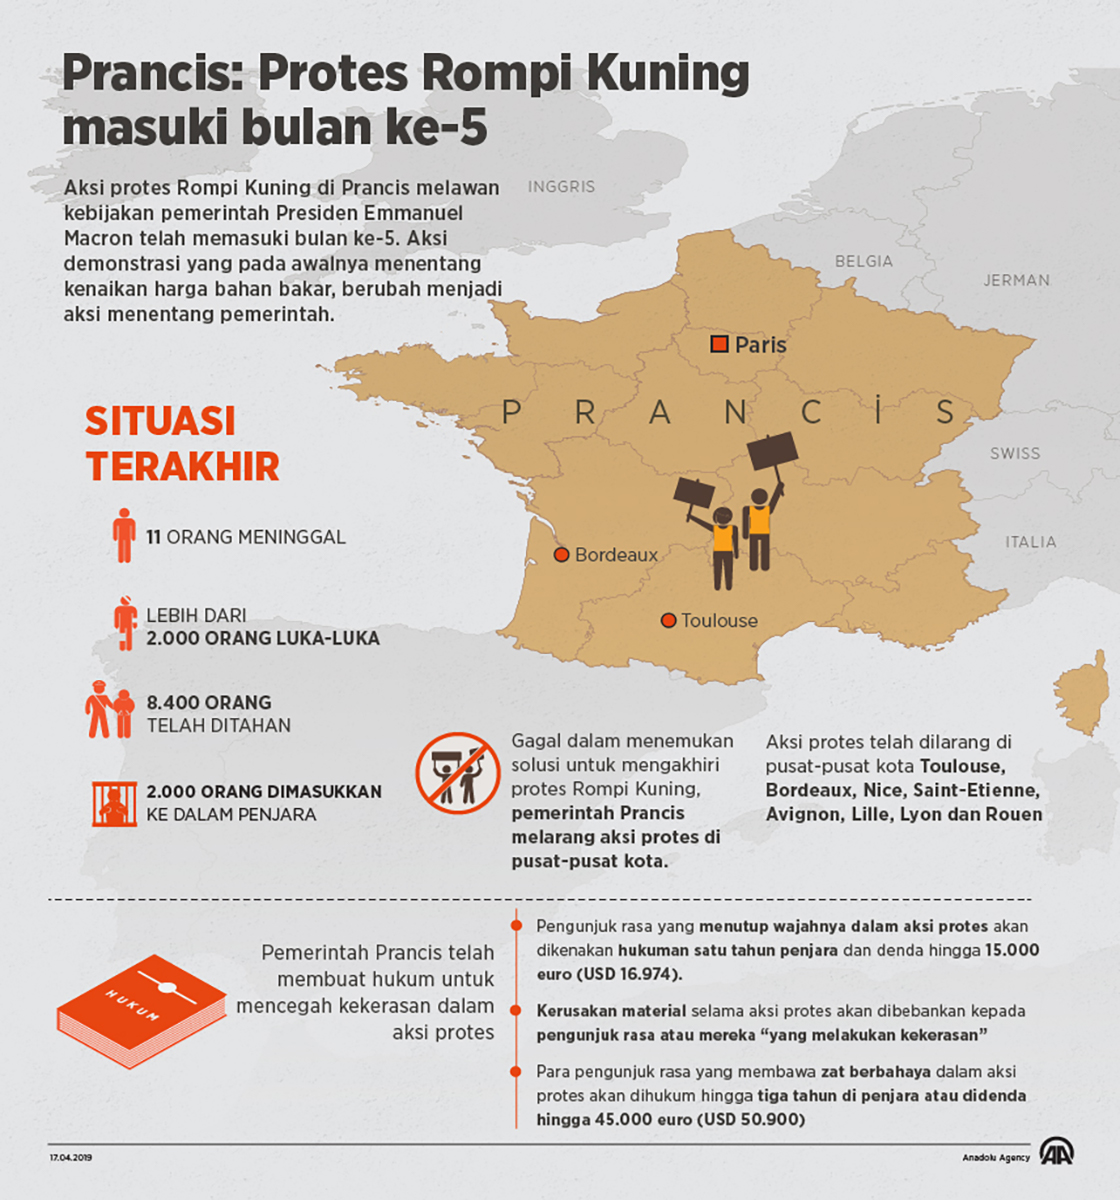 Prancis: Protes Rompi Kuning masuki bulan ke-5